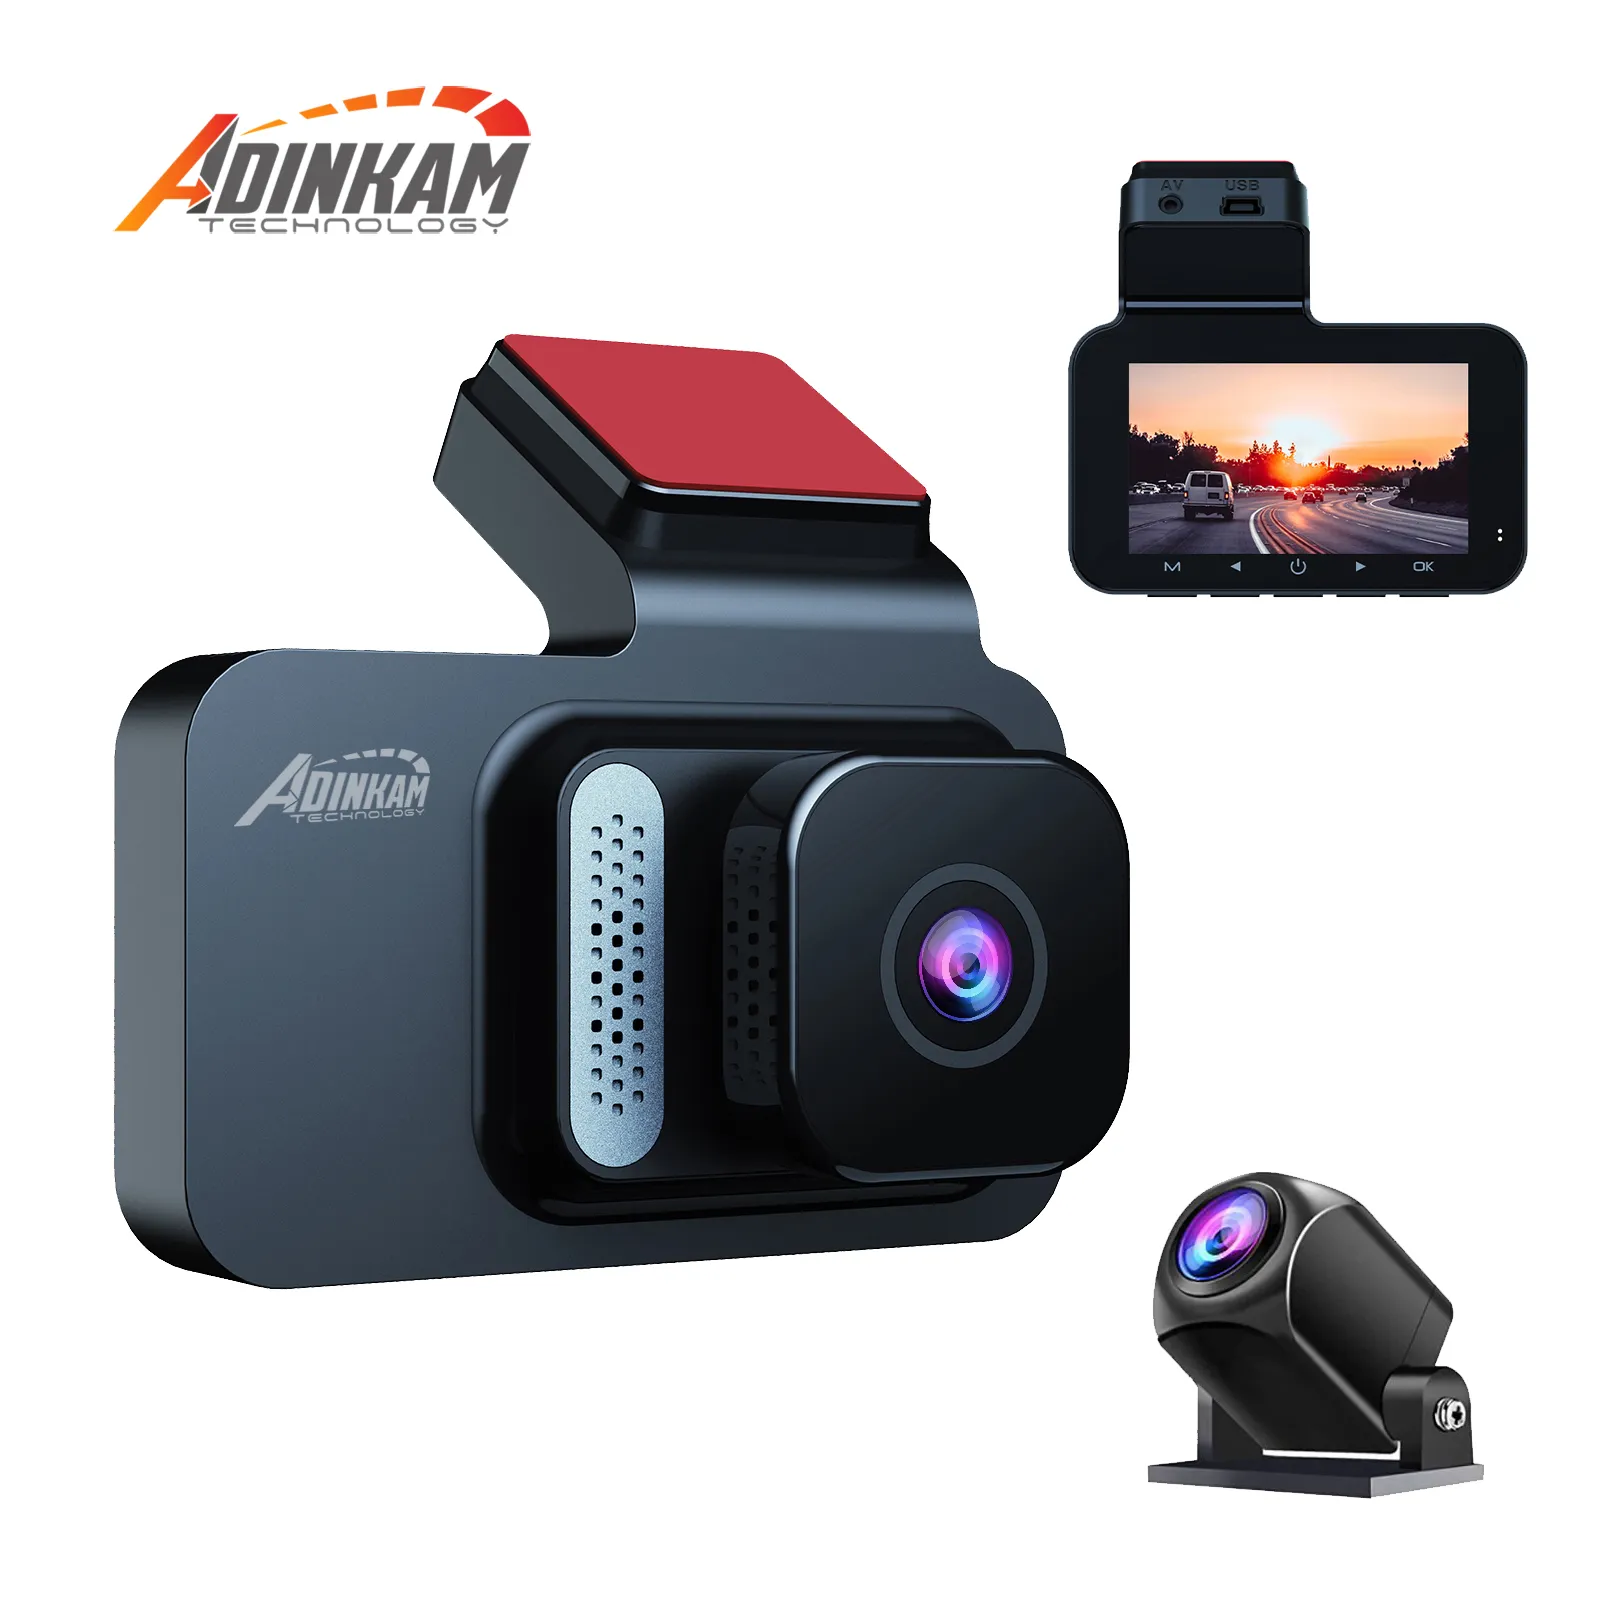 Adinkam กล้องติดรถยนต์3นิ้ว IPS แบบพกพากล้องคู่รองรับ WiFi WDR Mini Car DVR 24H gapless บันทึก1080P Black BOX